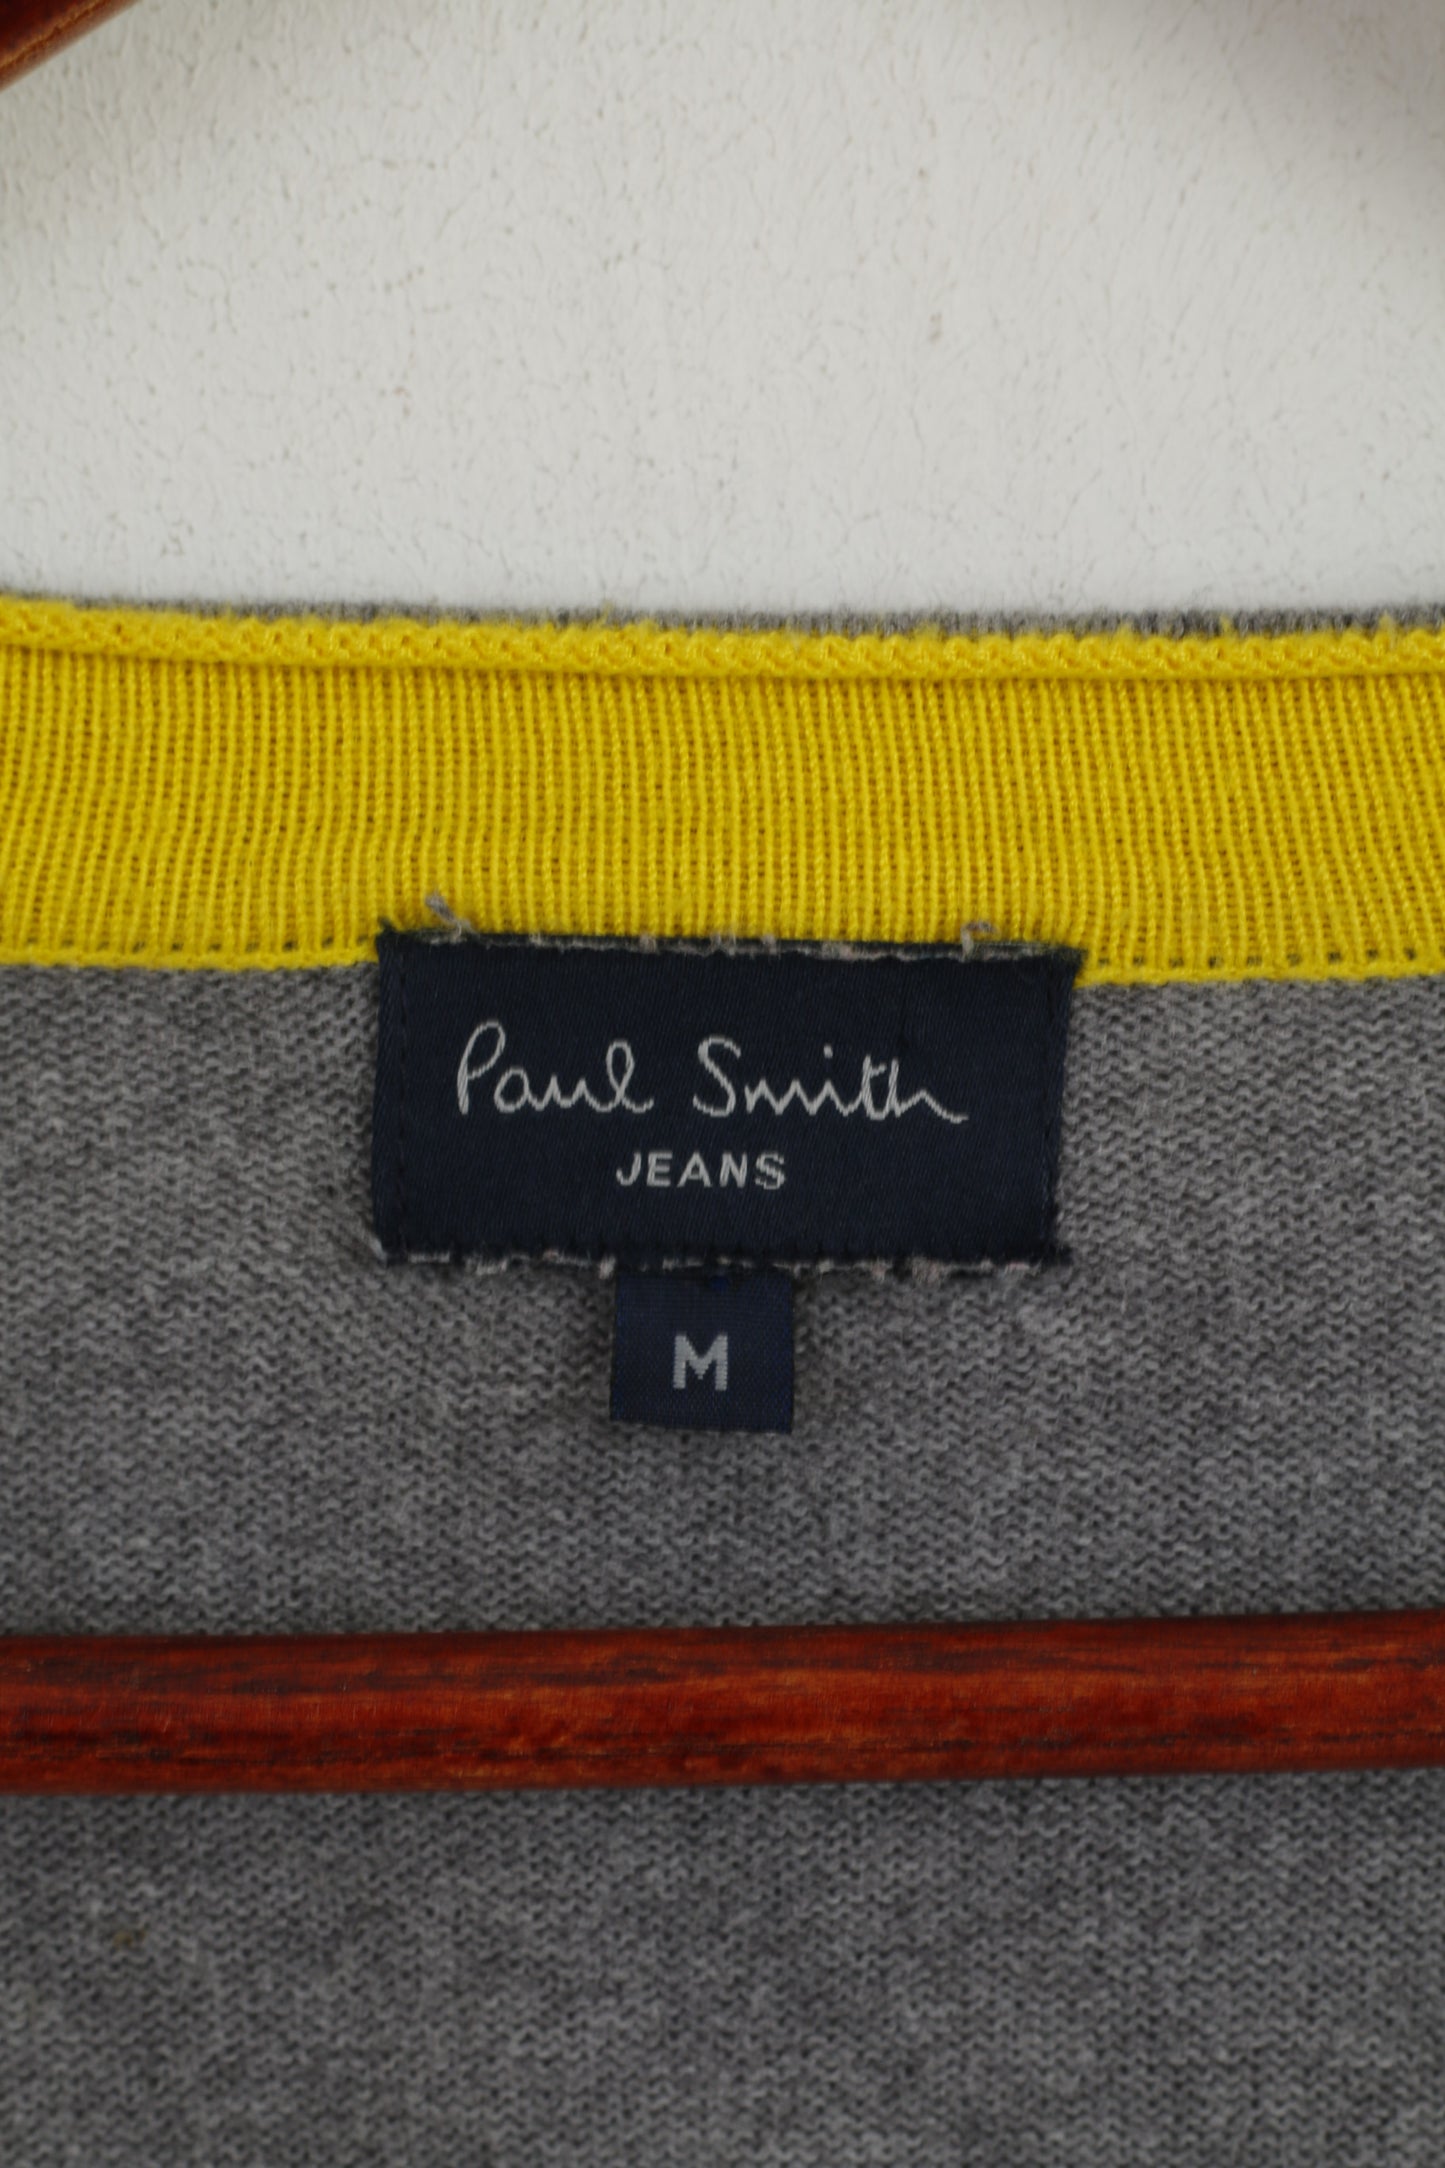 Paul Smith Jeans Men M Jumper Grey Cotton V Neck Classic Sweater